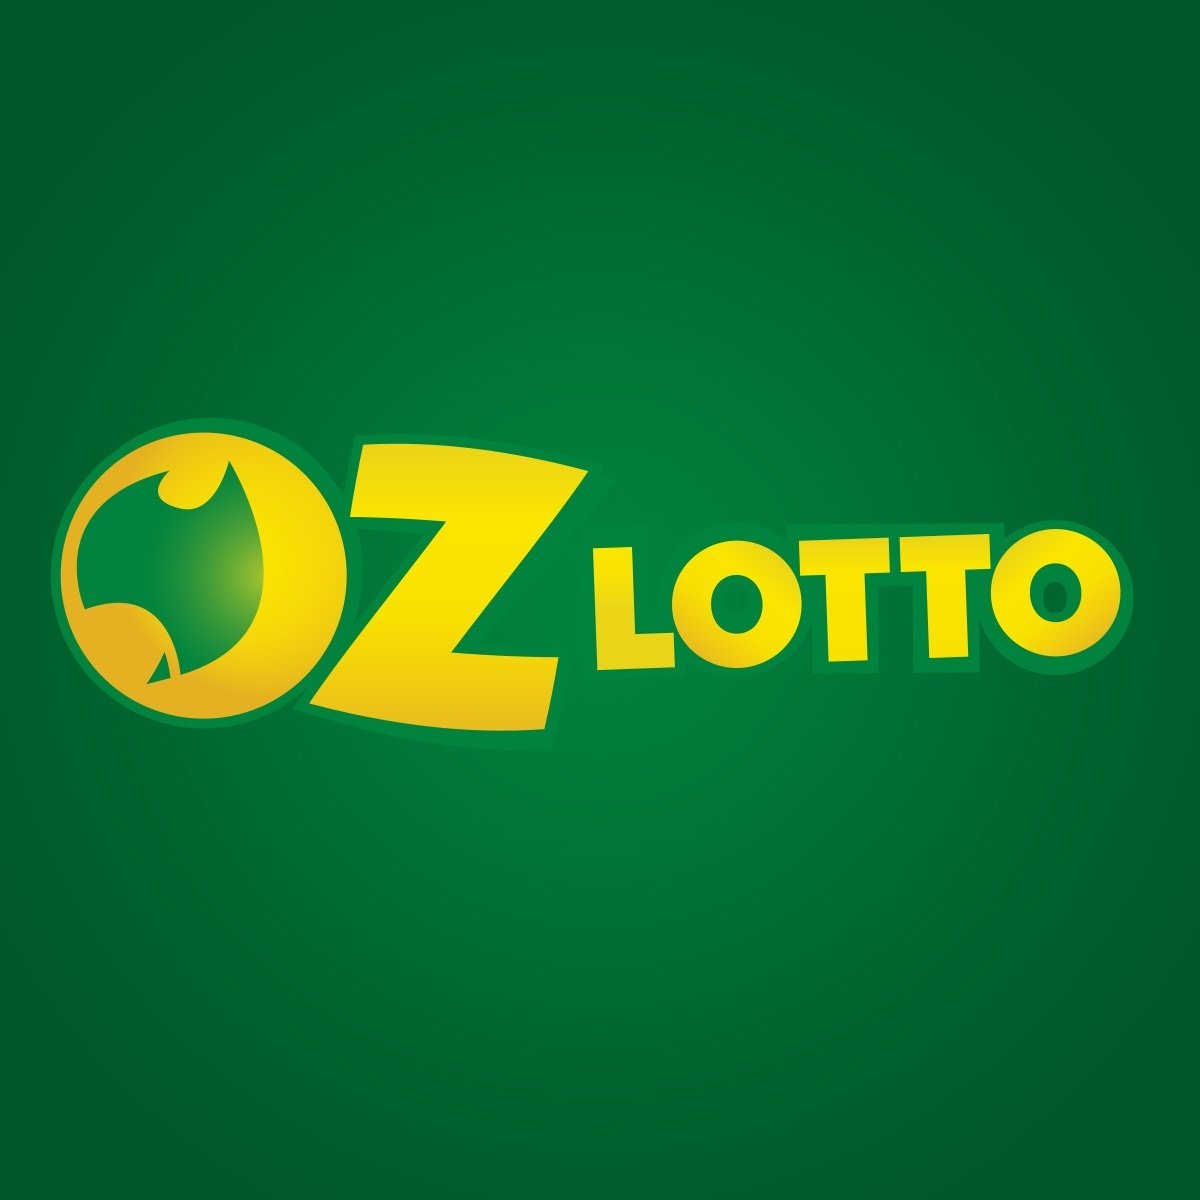 Oz Lotto - Online | Oz Lotteries